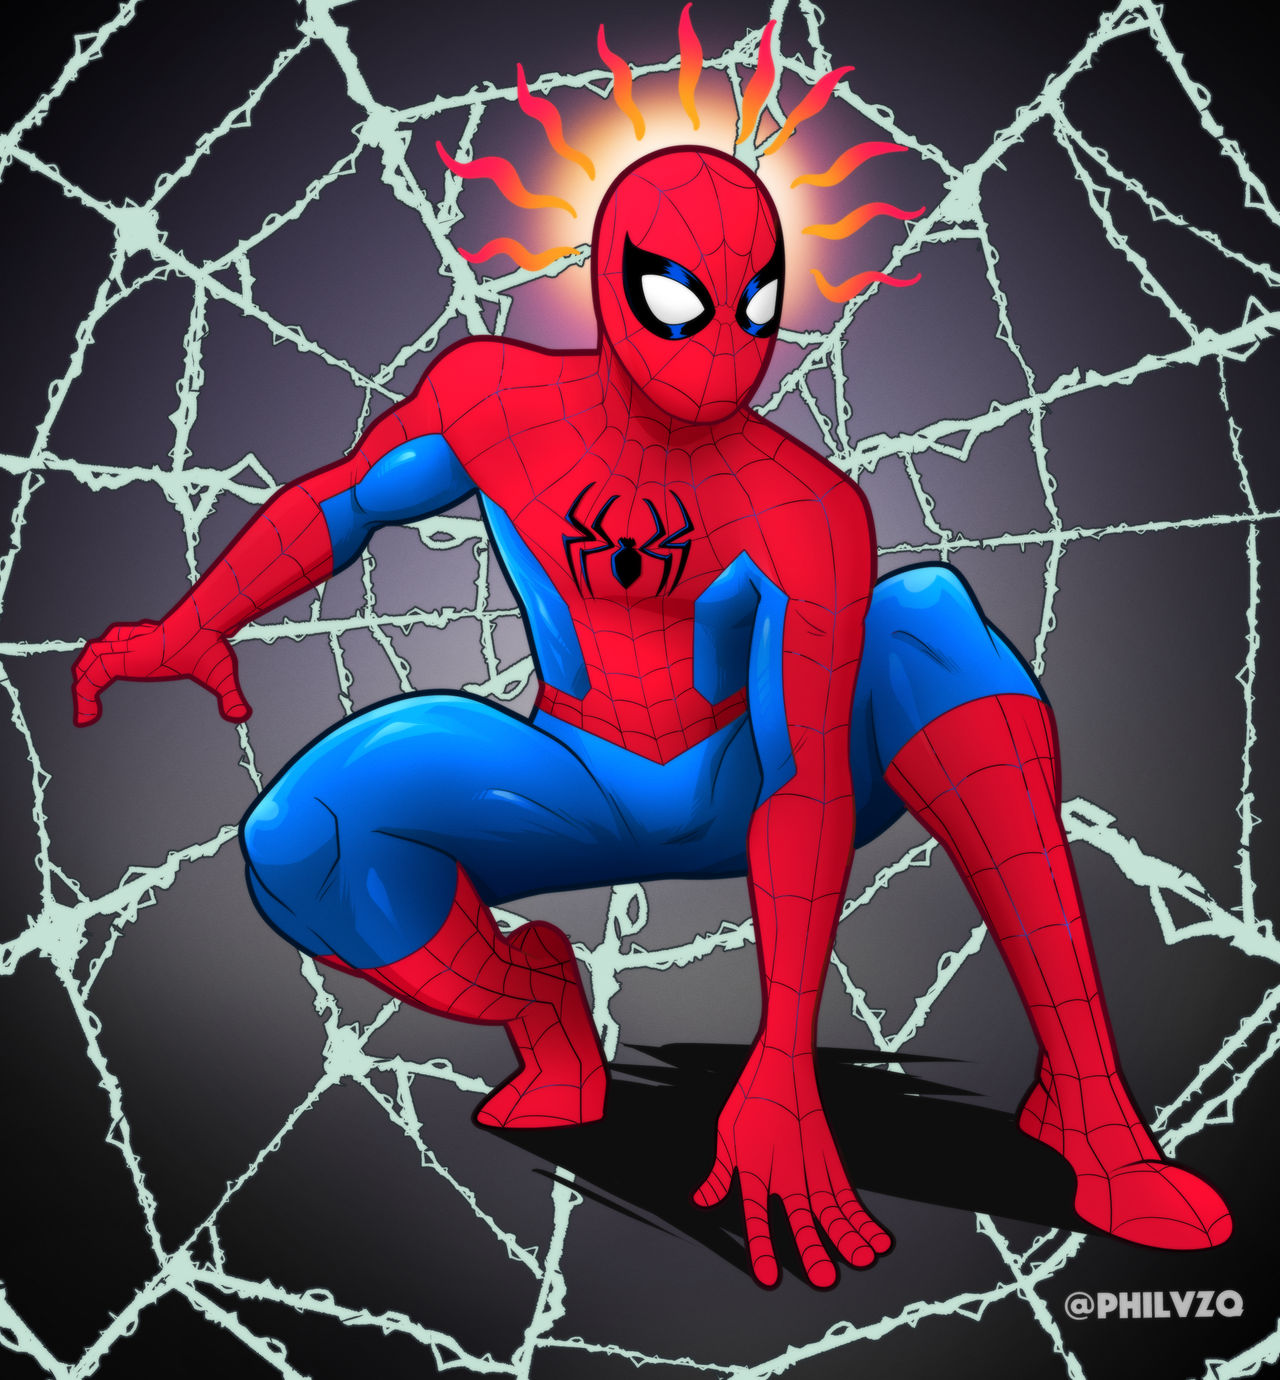 Spider-Man Forever by Bolinha644 on DeviantArt